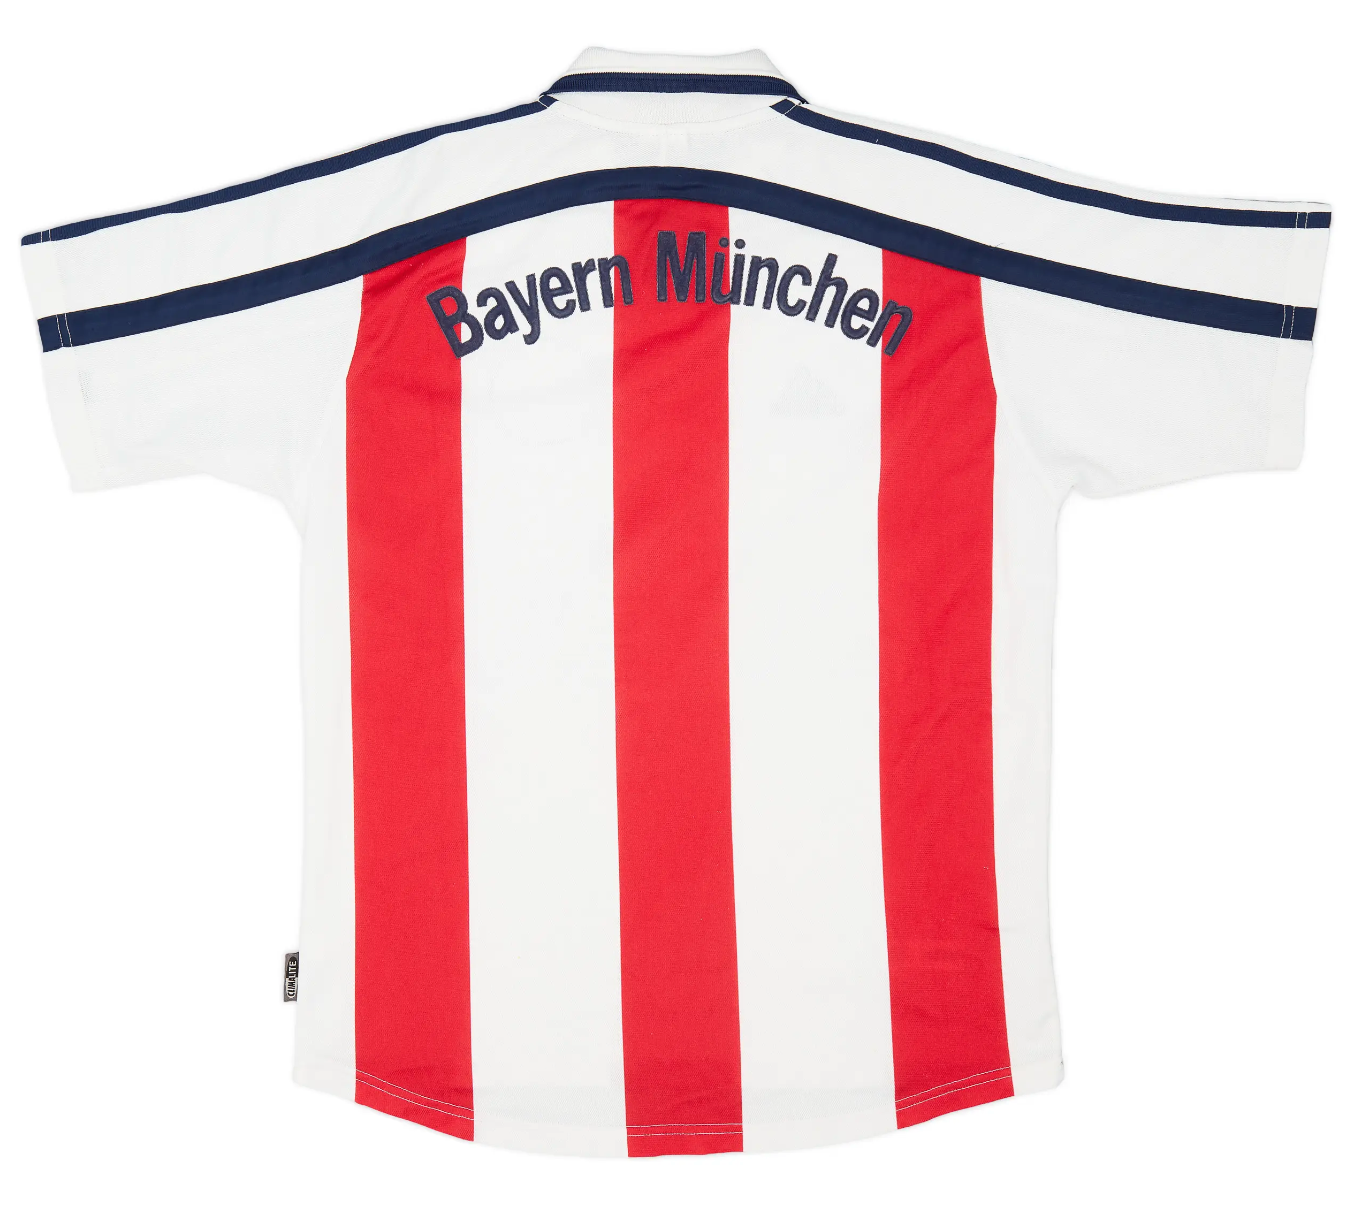 Sensational Bayern Munich 90's away jersey 2000/01